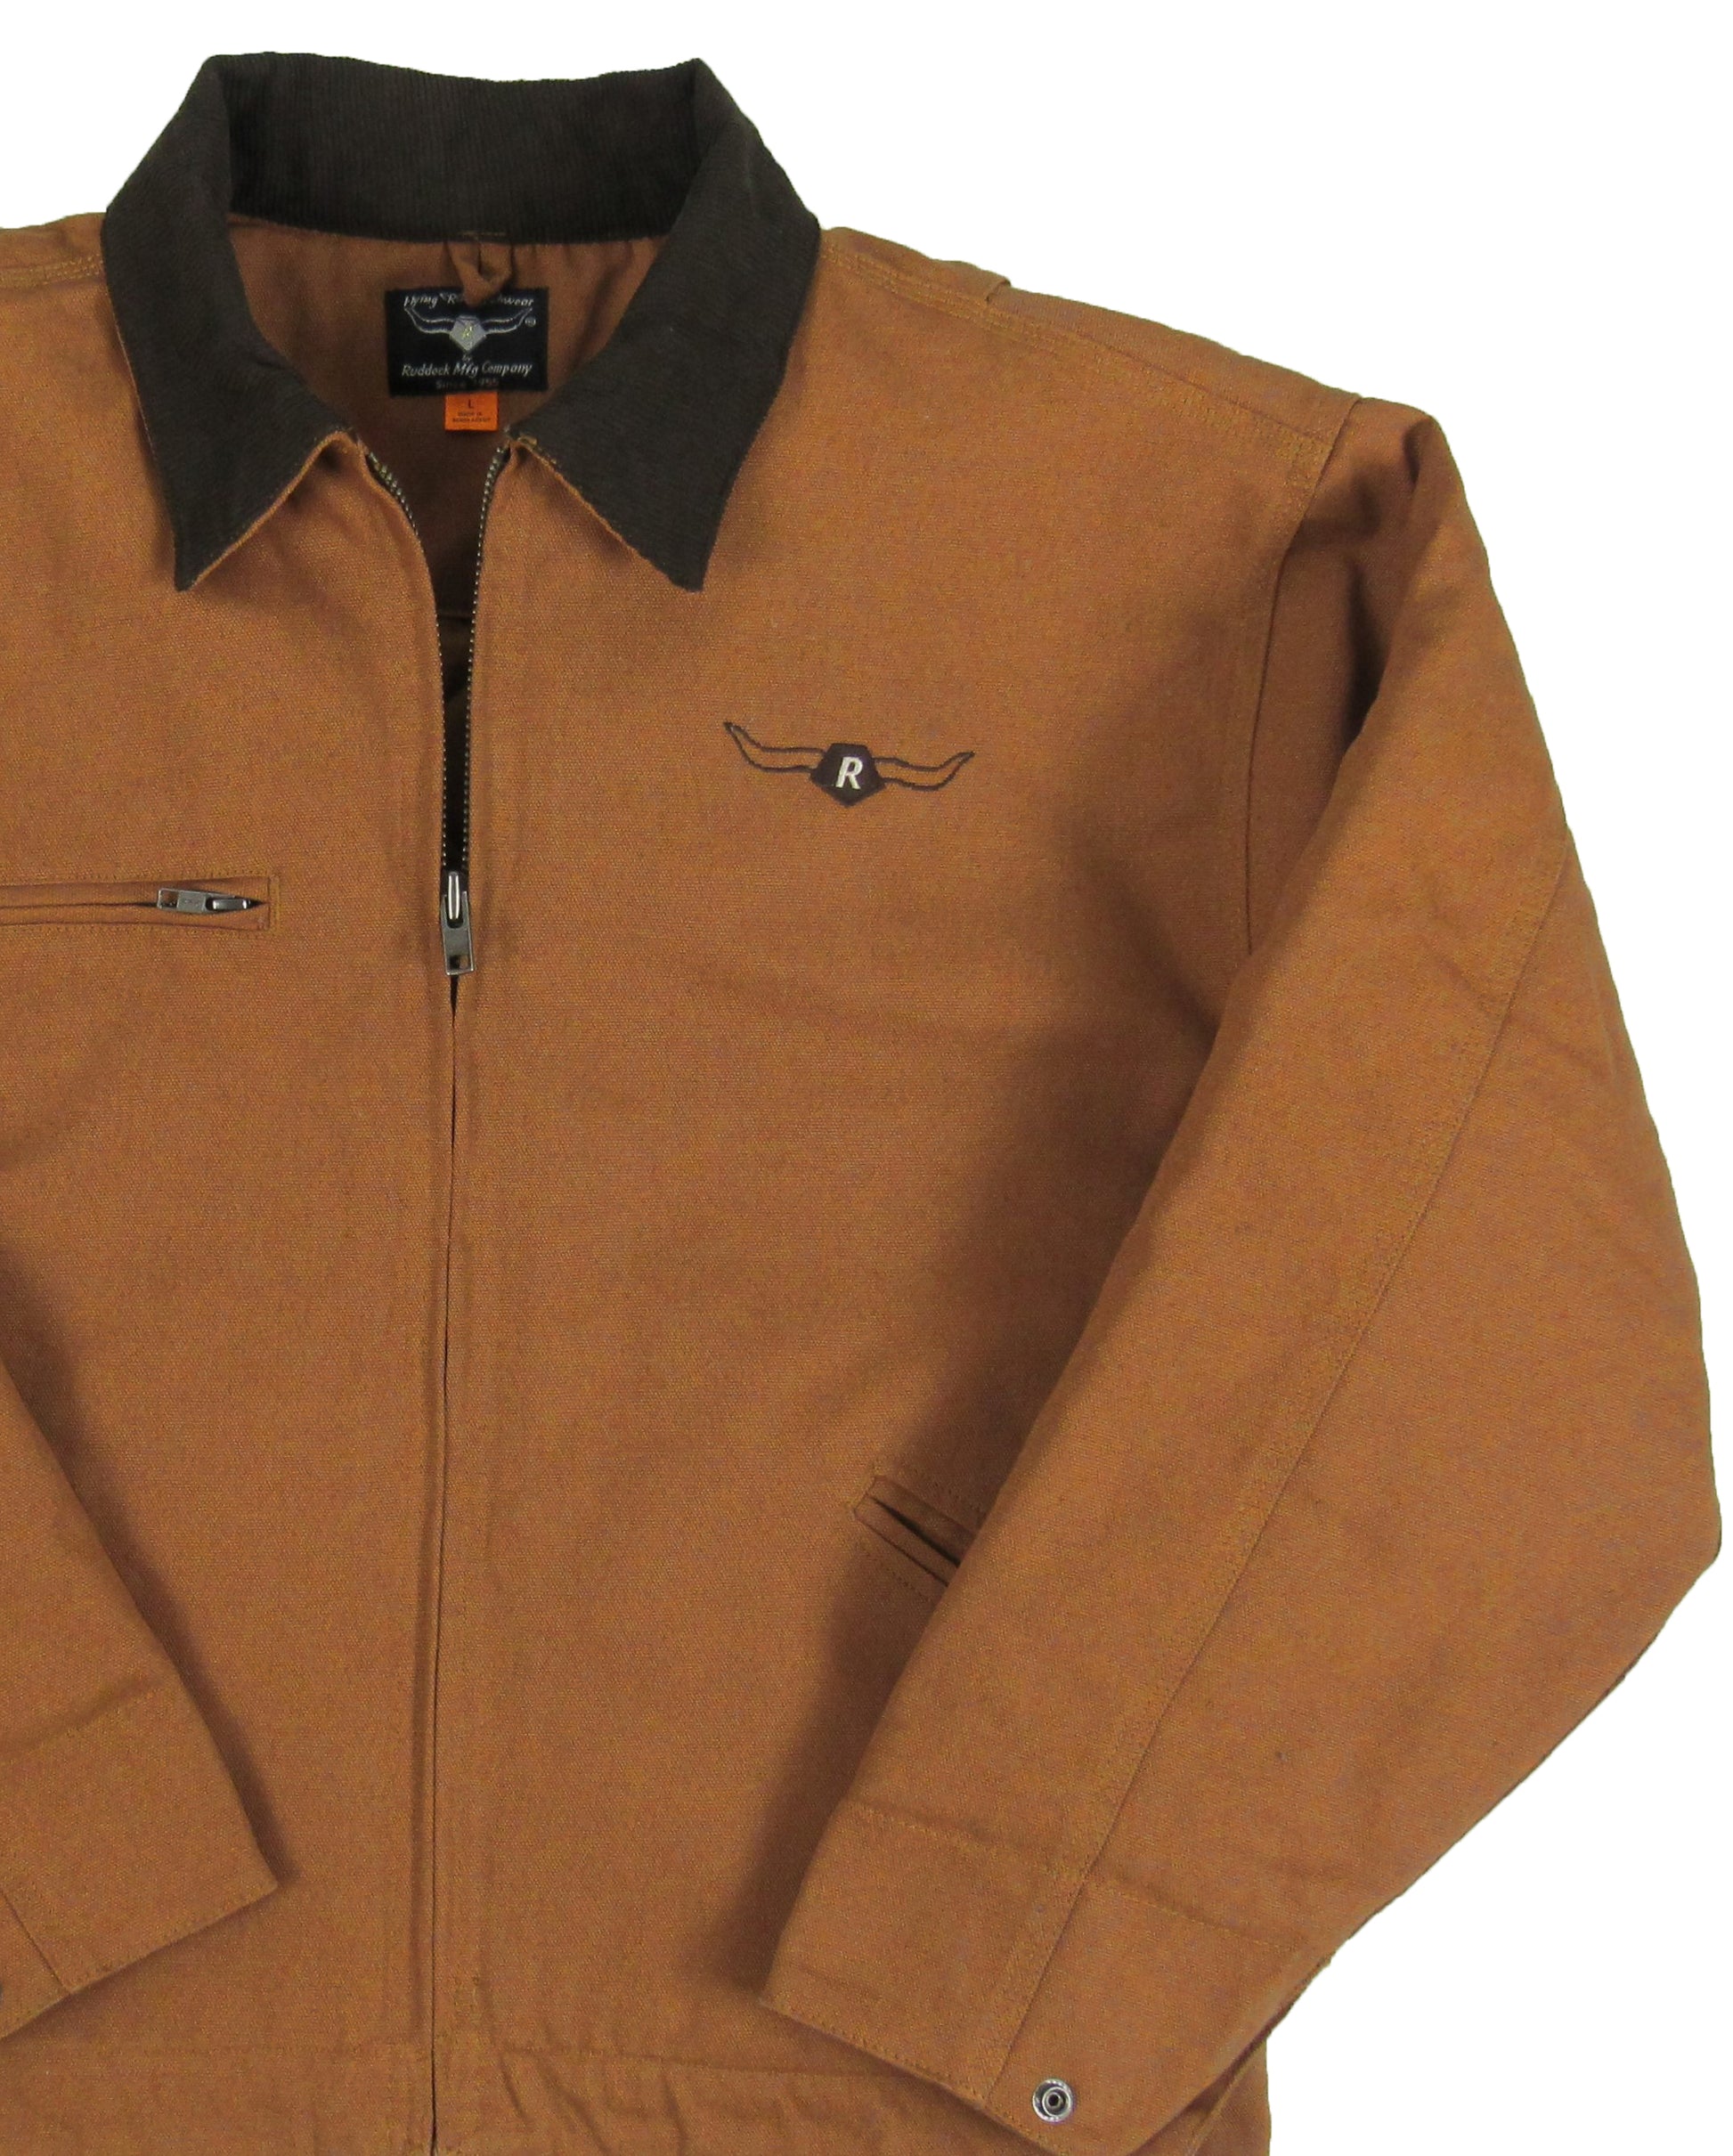 prairie canvas jacket by Flying R Ranchwear in brown canvas